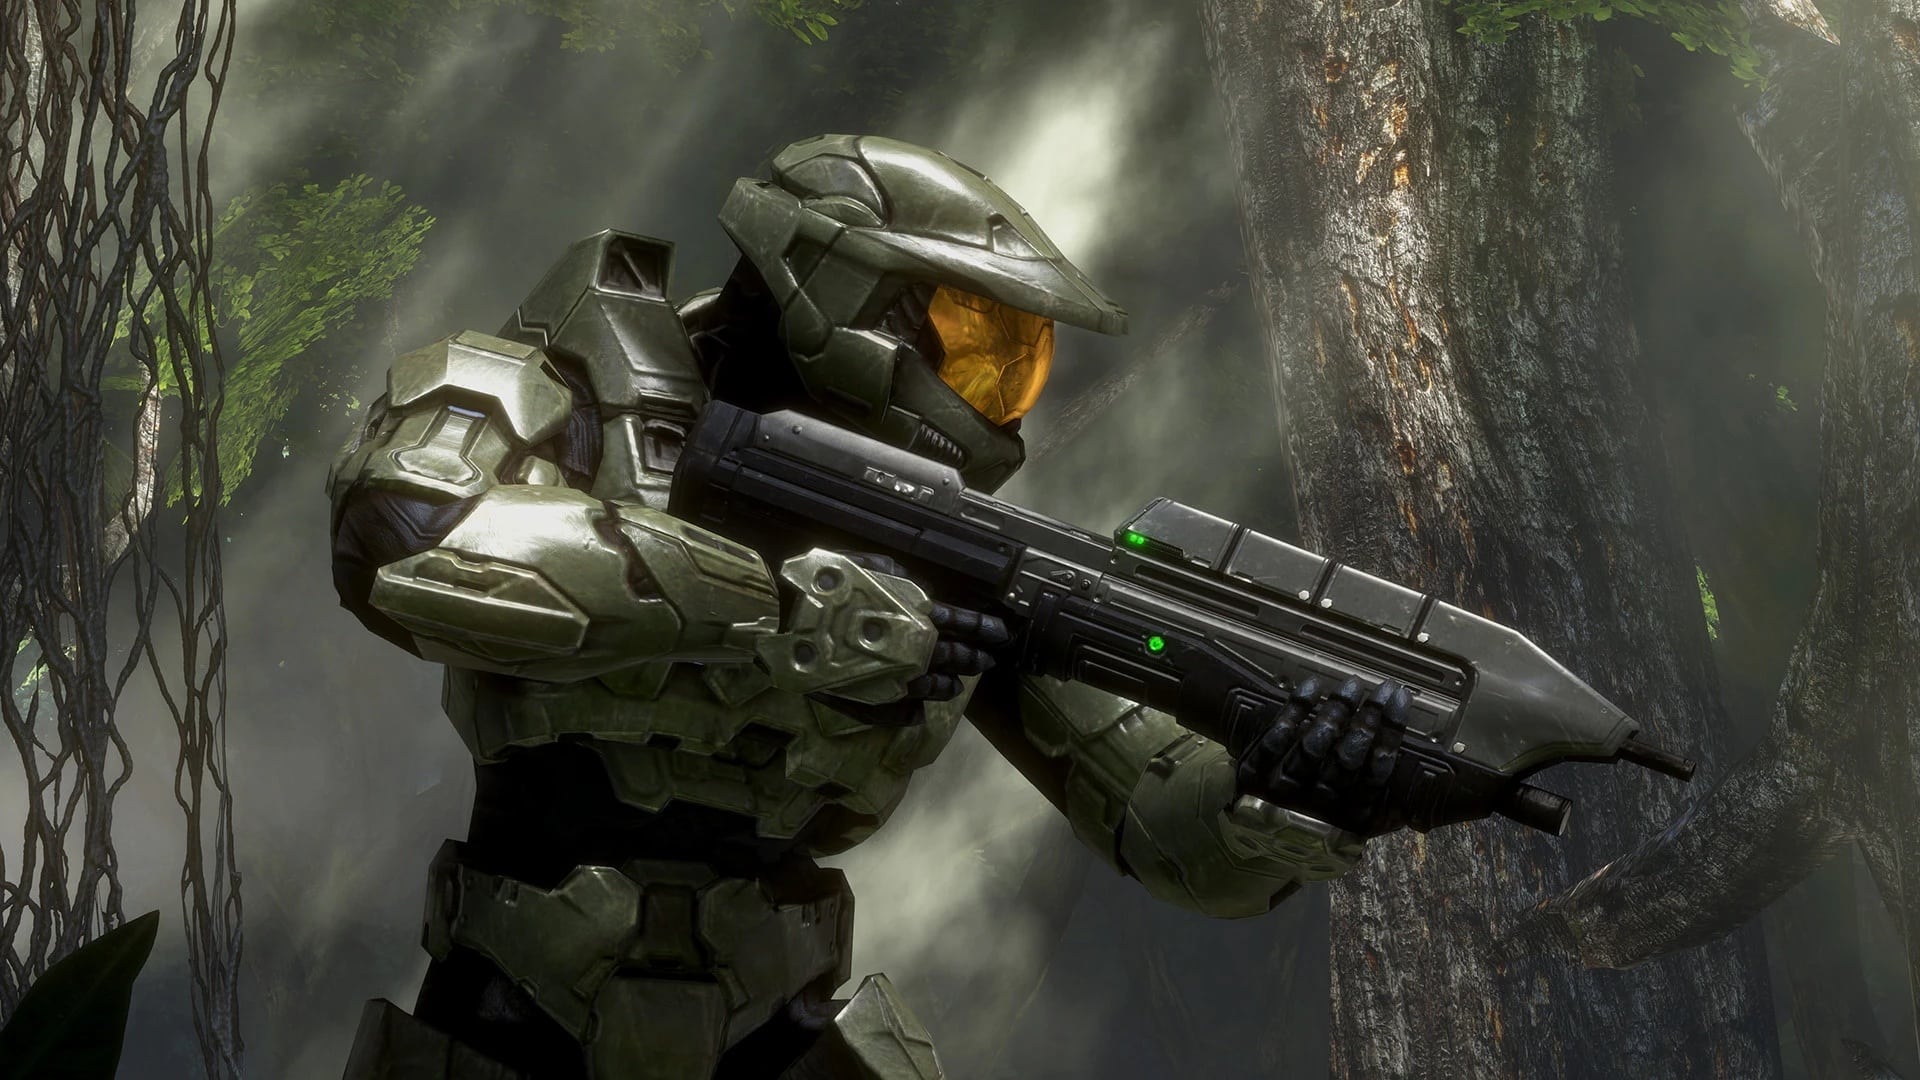 Legendary Halo designer joins Netflix to create original AAA game